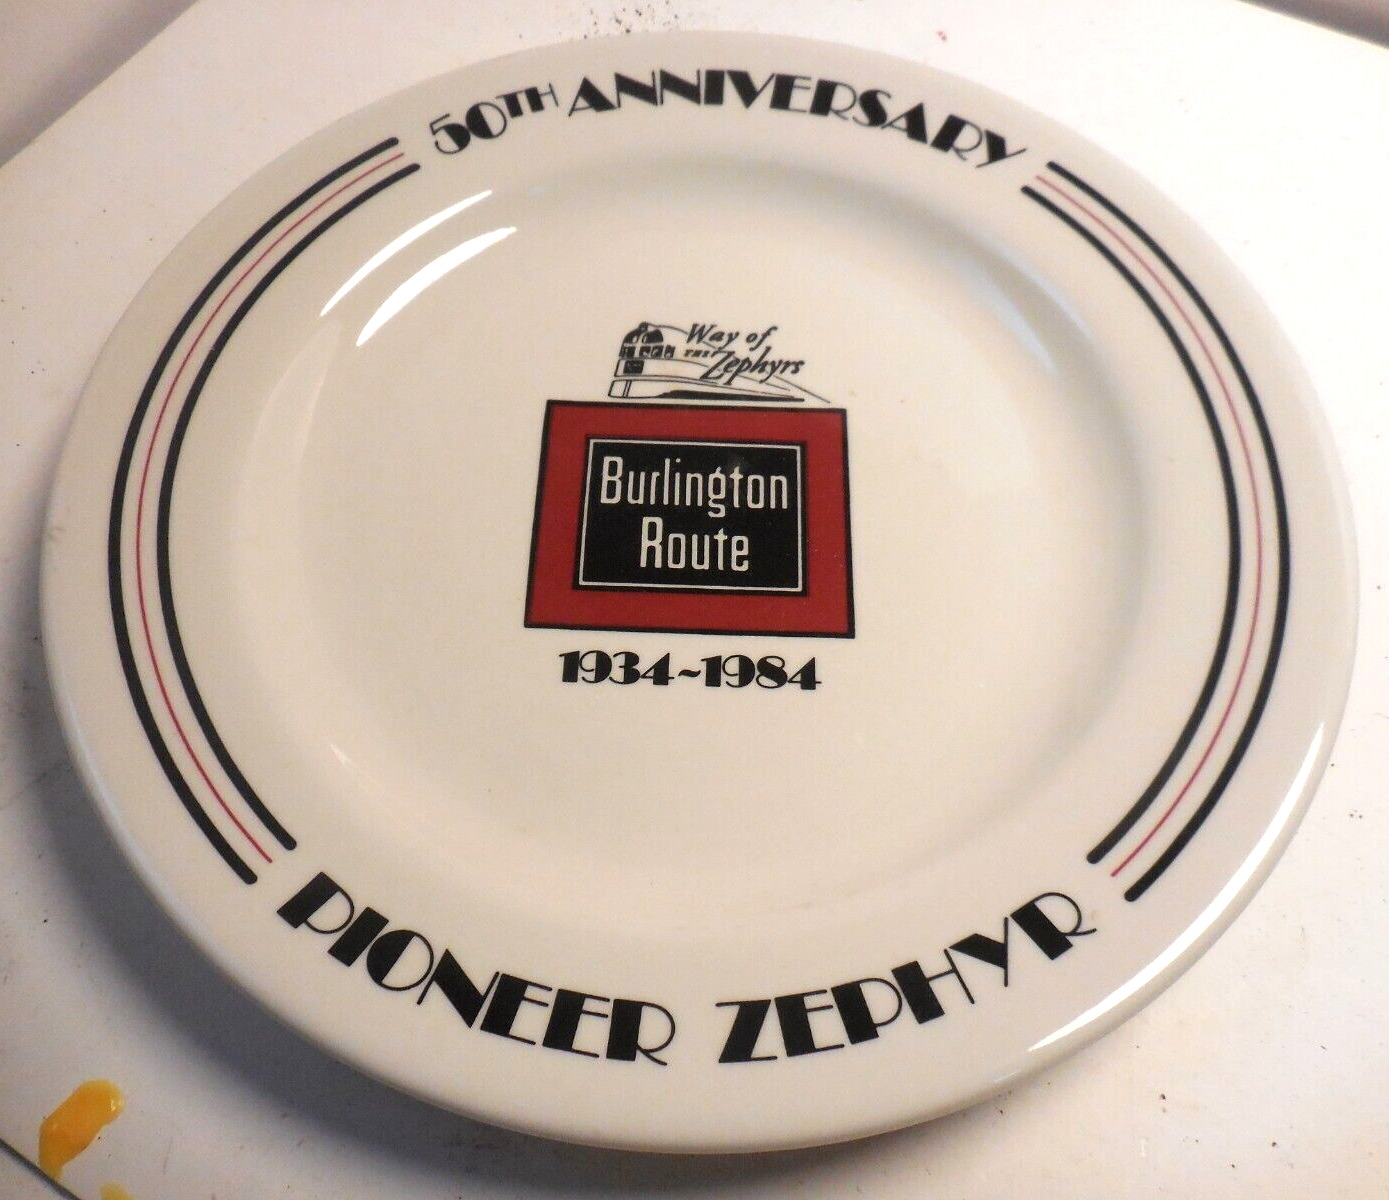 Burlington CB&Q Pioneer Zephyr Plate 1934-1984